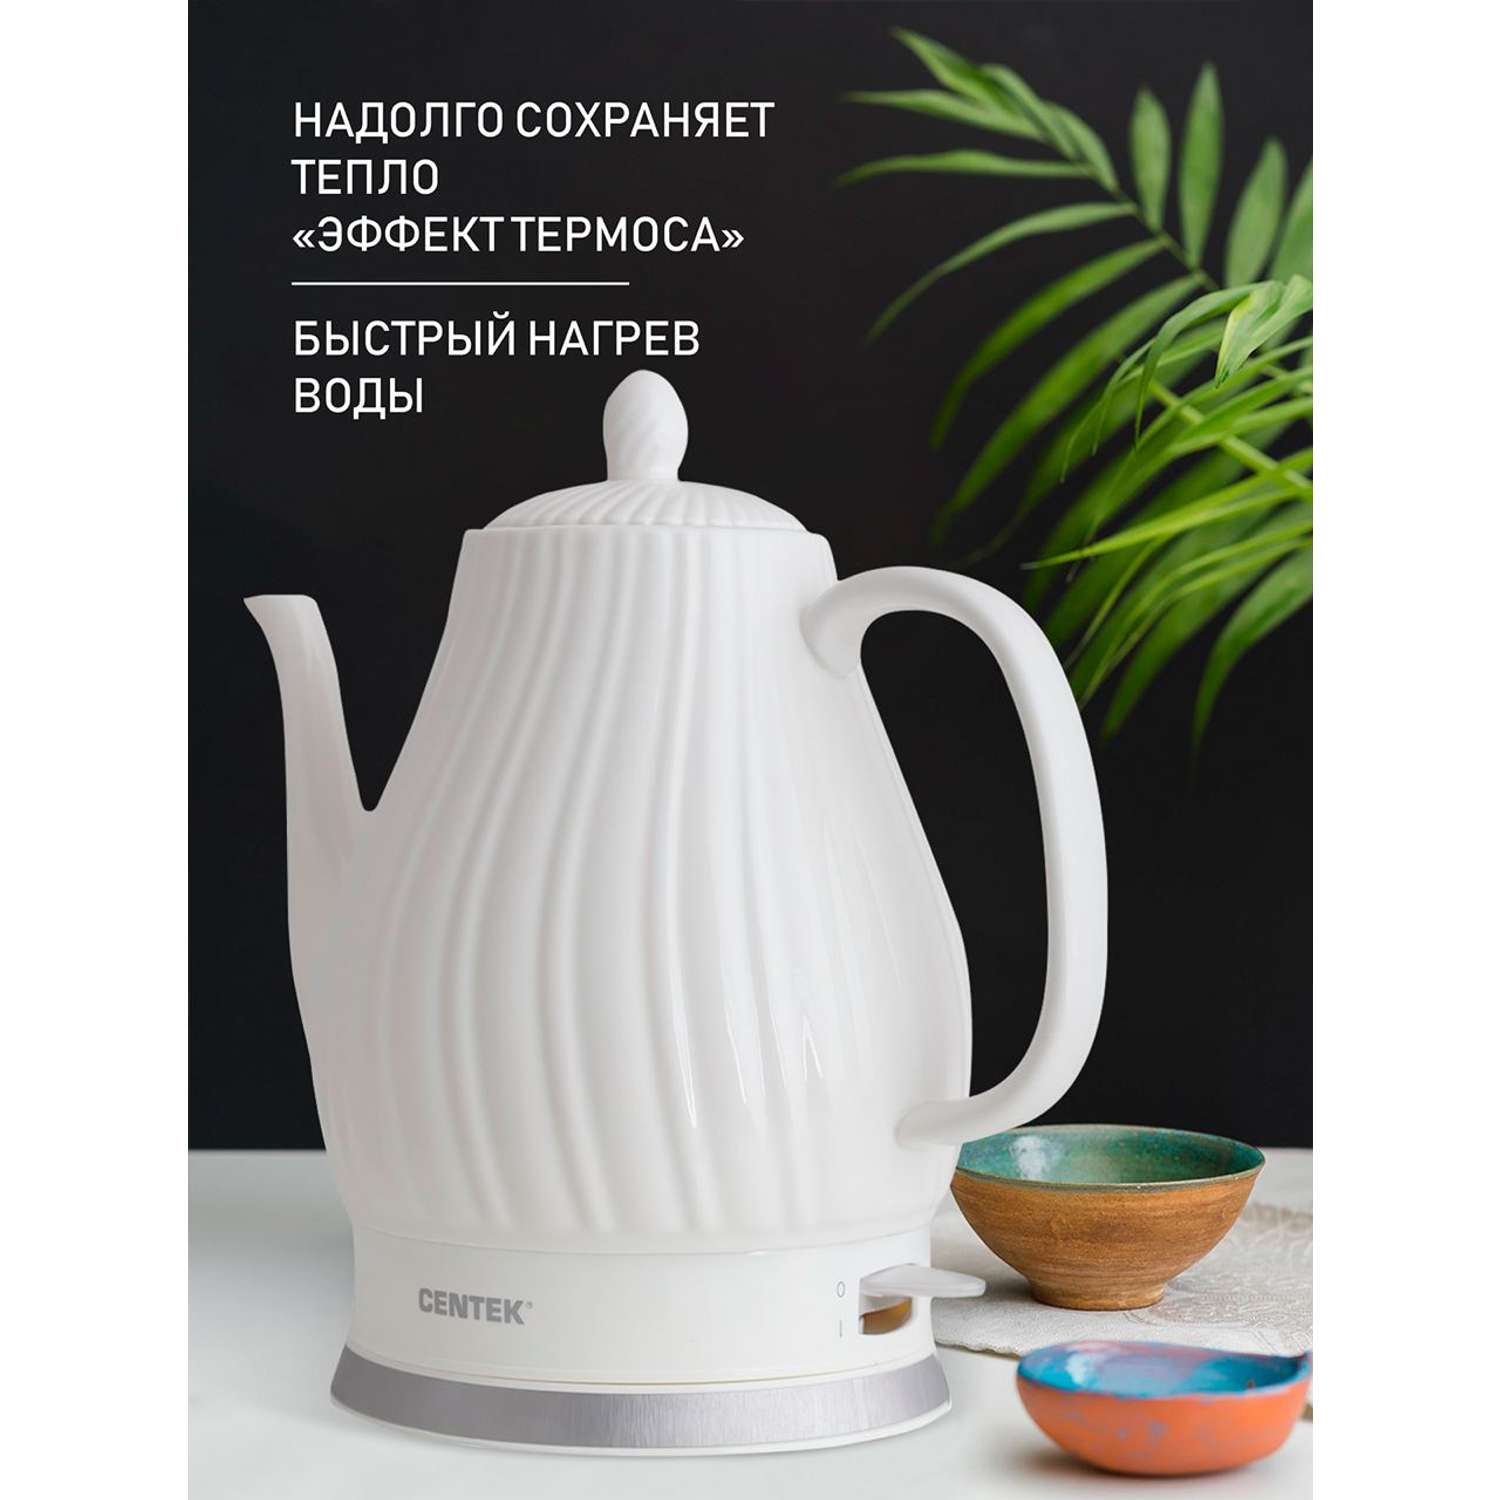 Электрический чайник CENTEK CT-0064 белый 2 л керамика рельефный корпус - фото 2